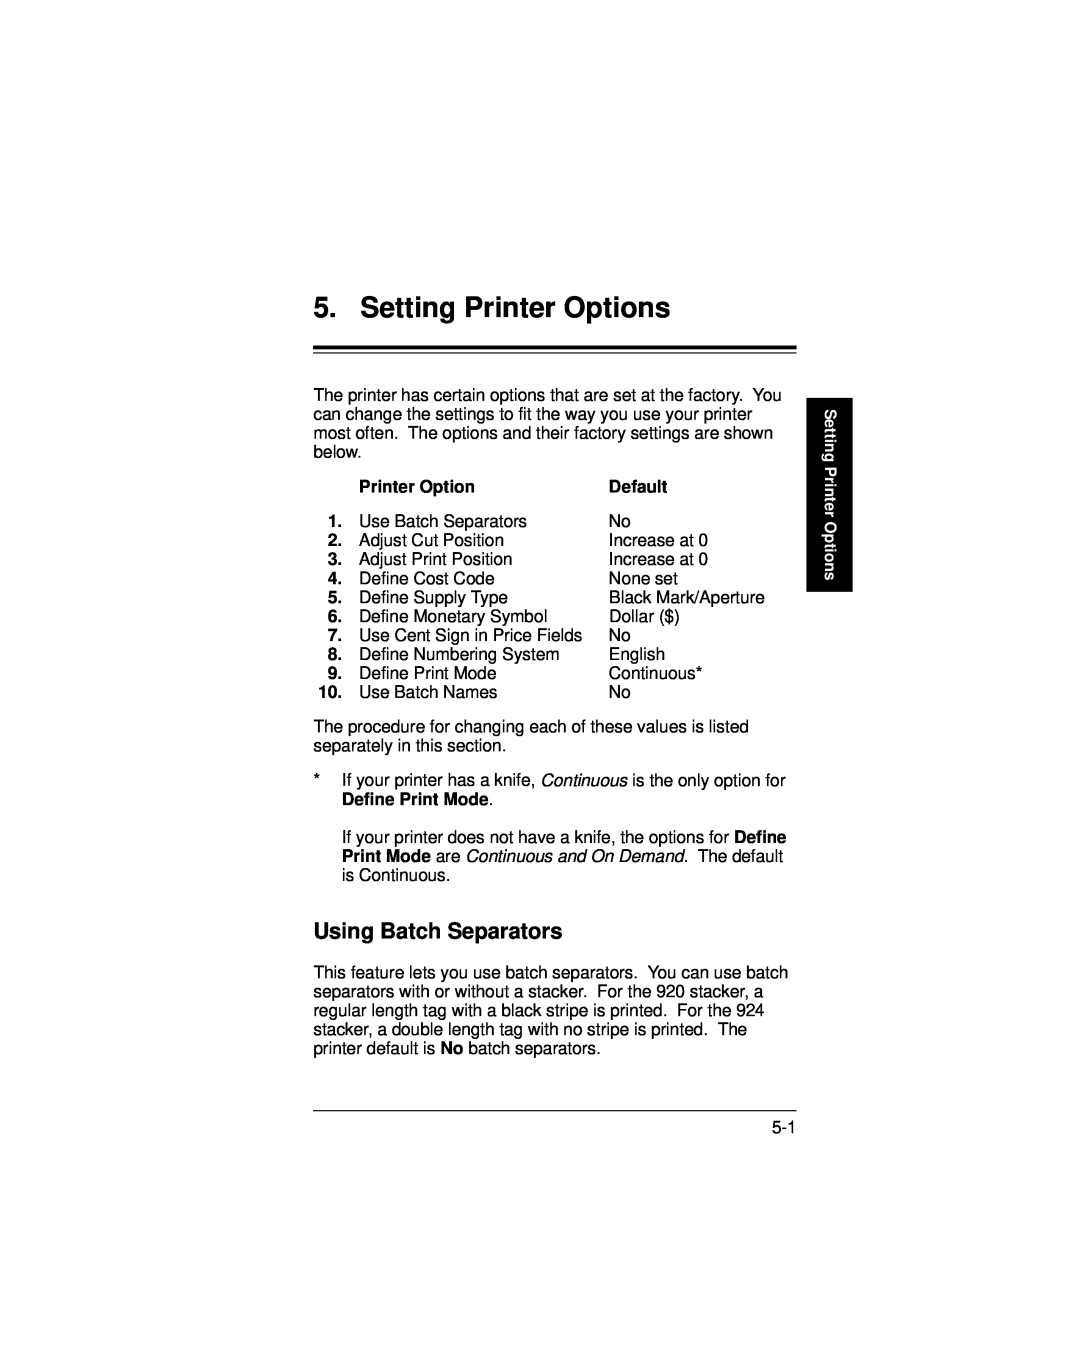 Paxar 9400 manual Setting Printer Options, Using Batch Separators, Default 